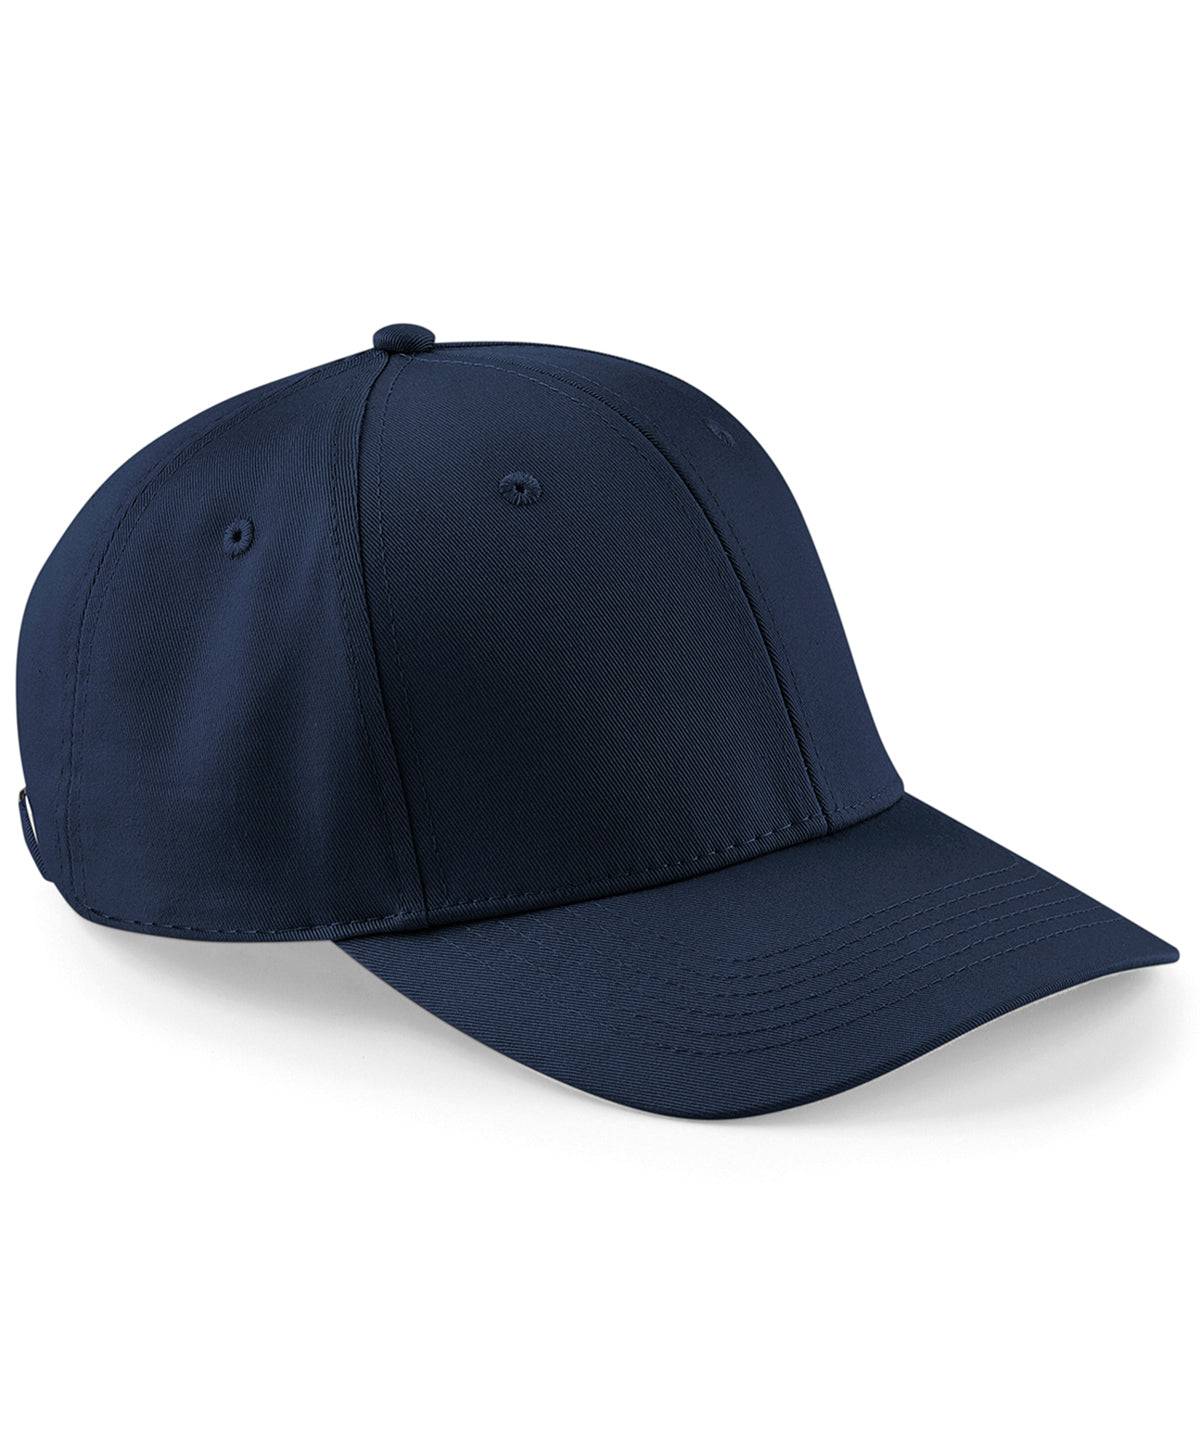 Navy - Urbanwear 6-panel cap